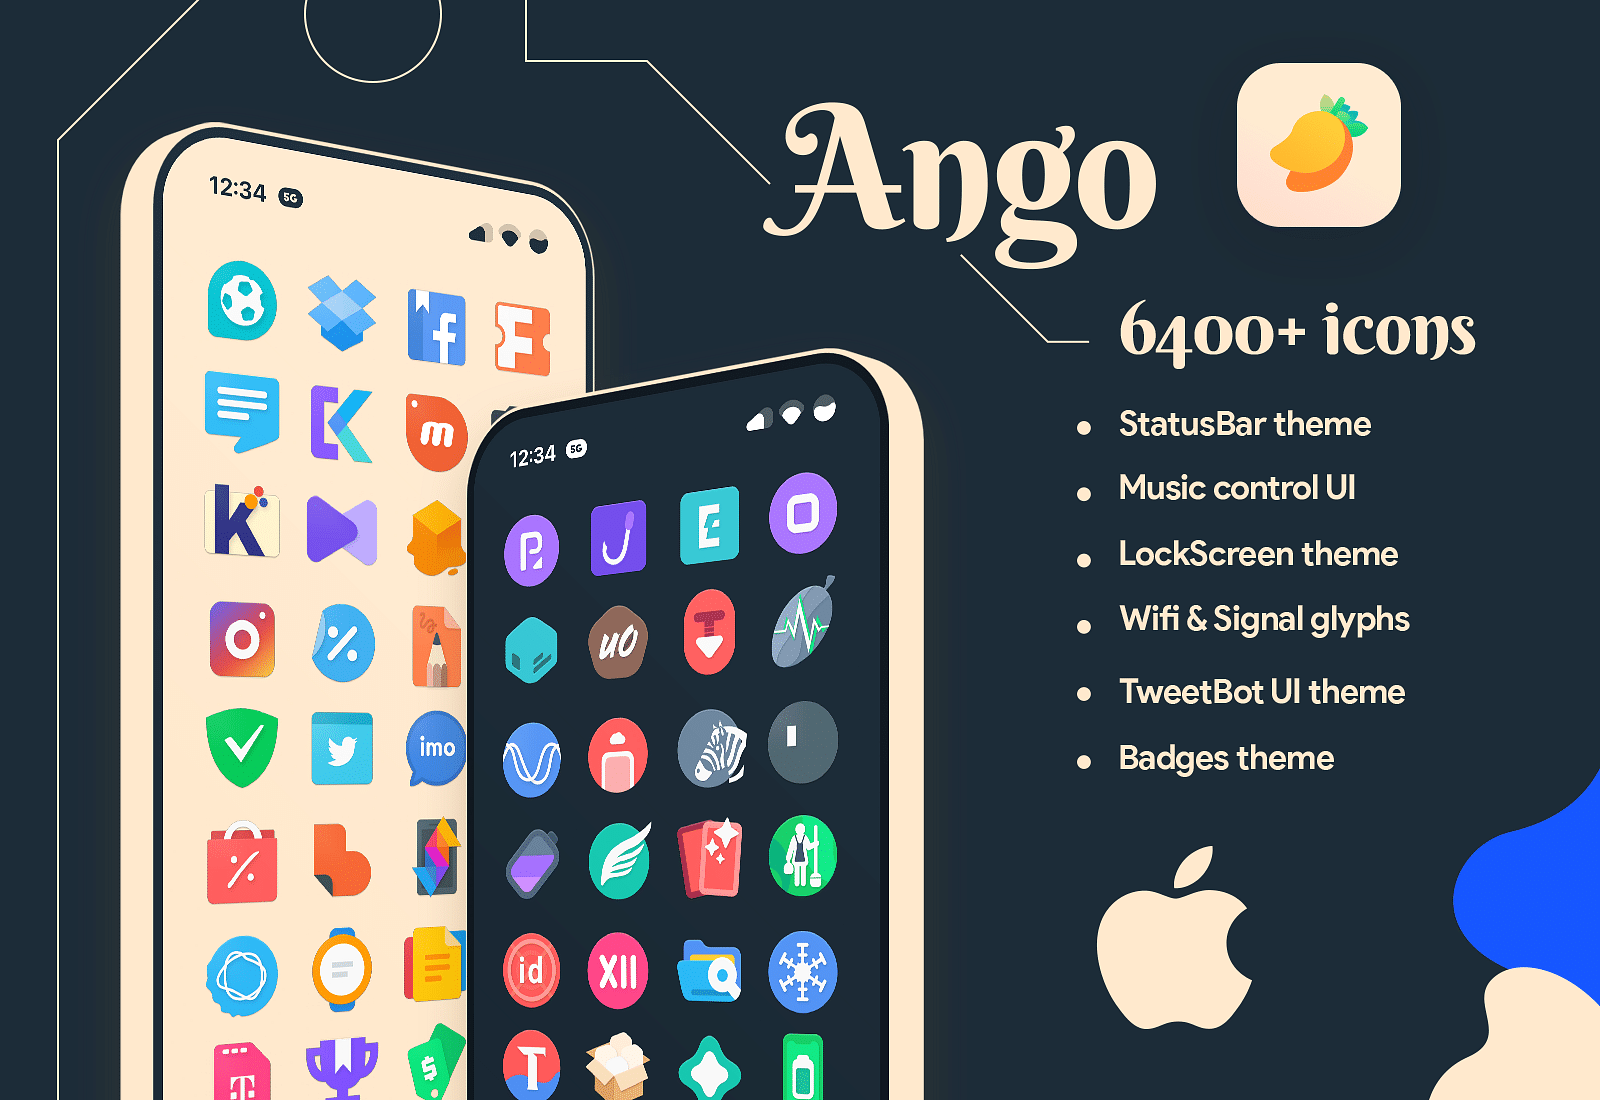 Ango Full Theme, Icons, Settings, UI, Status Bar icons, Music Control 